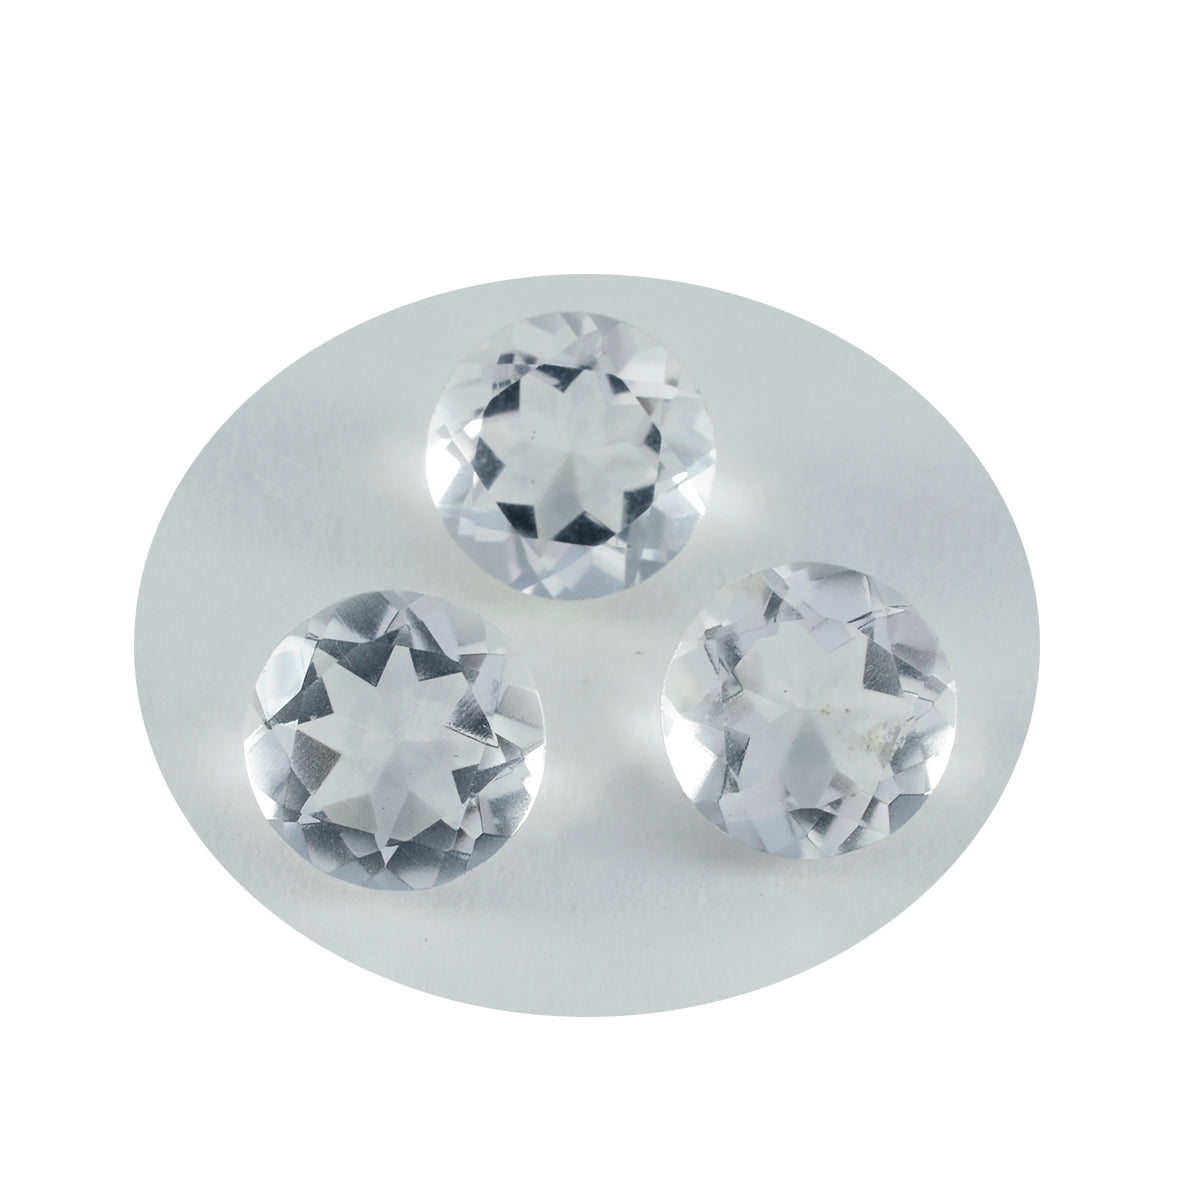 riyogems 1шт белый кристалл кварца ограненный 11х11 мм круглая форма +1 качество свободный драгоценный камень